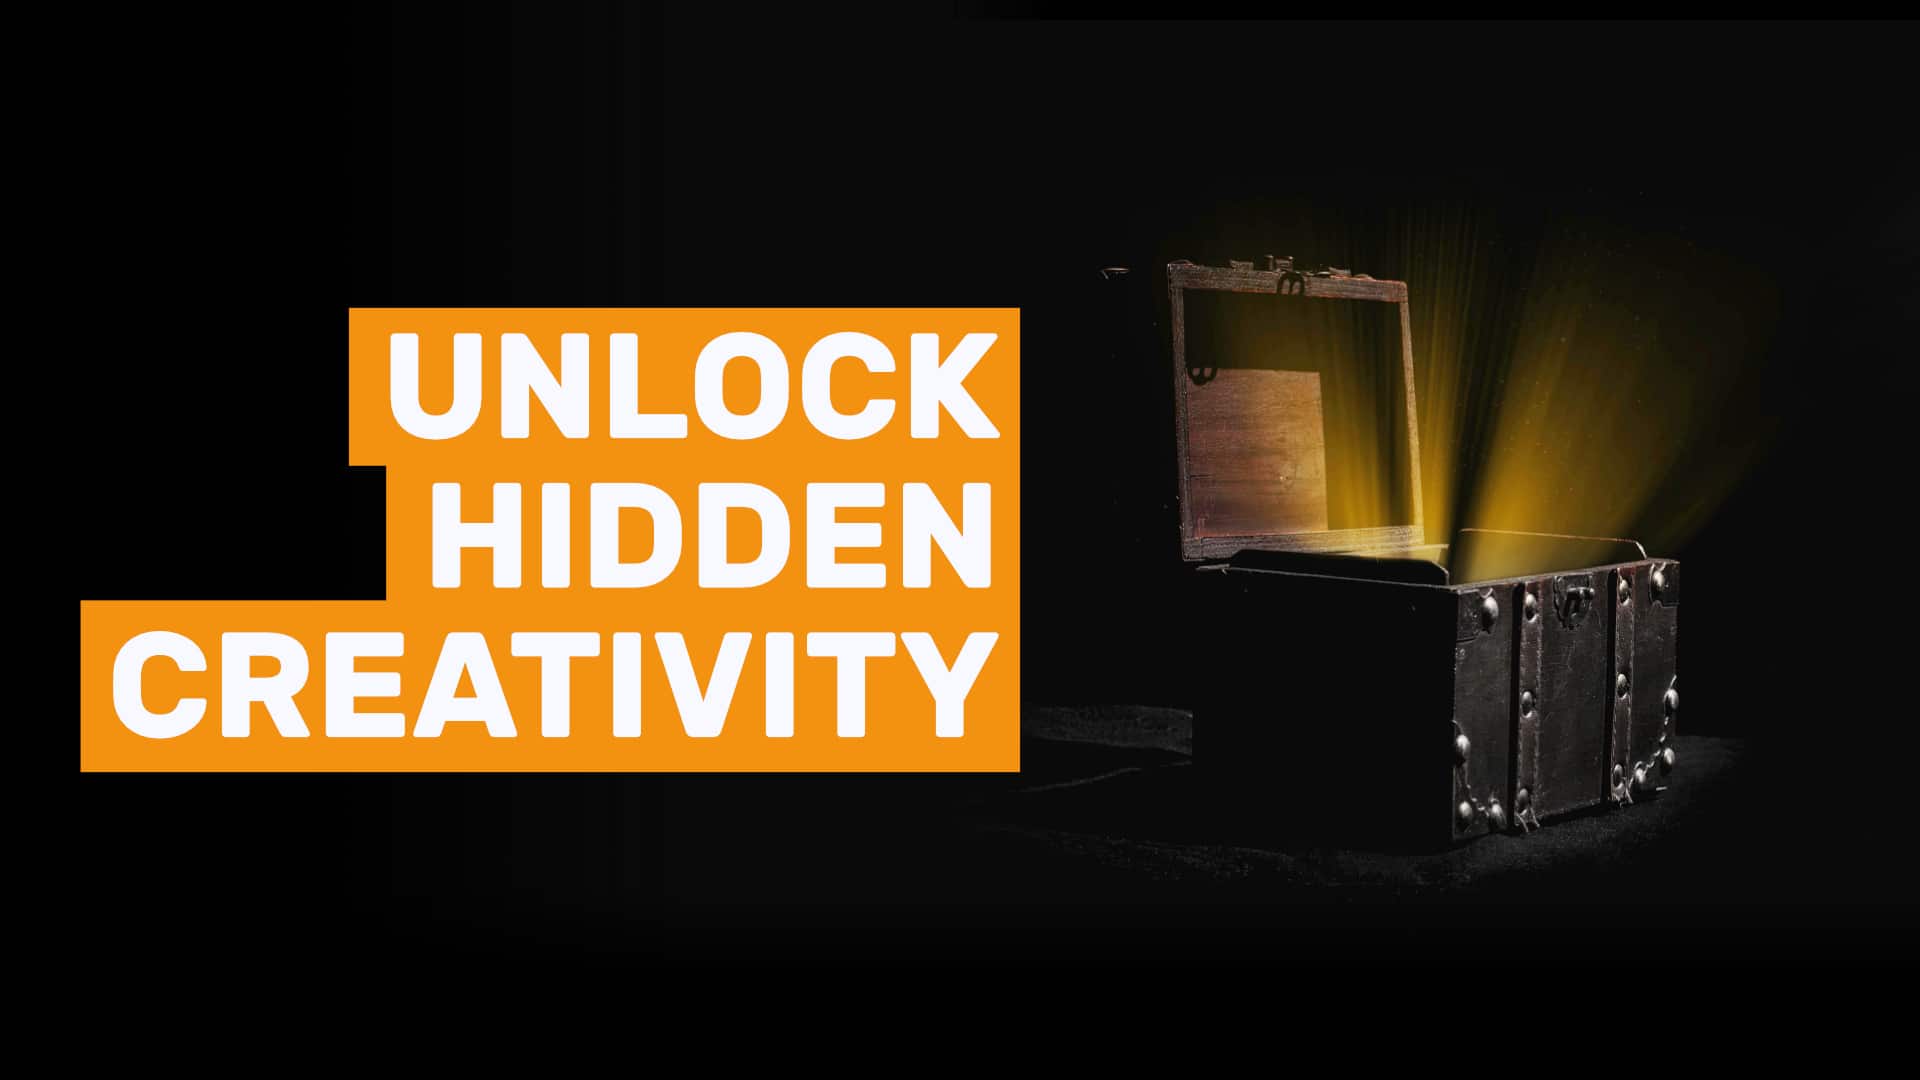 Ayoa | “Challenging Assumptions” – How to Unlock Hidden Creativity